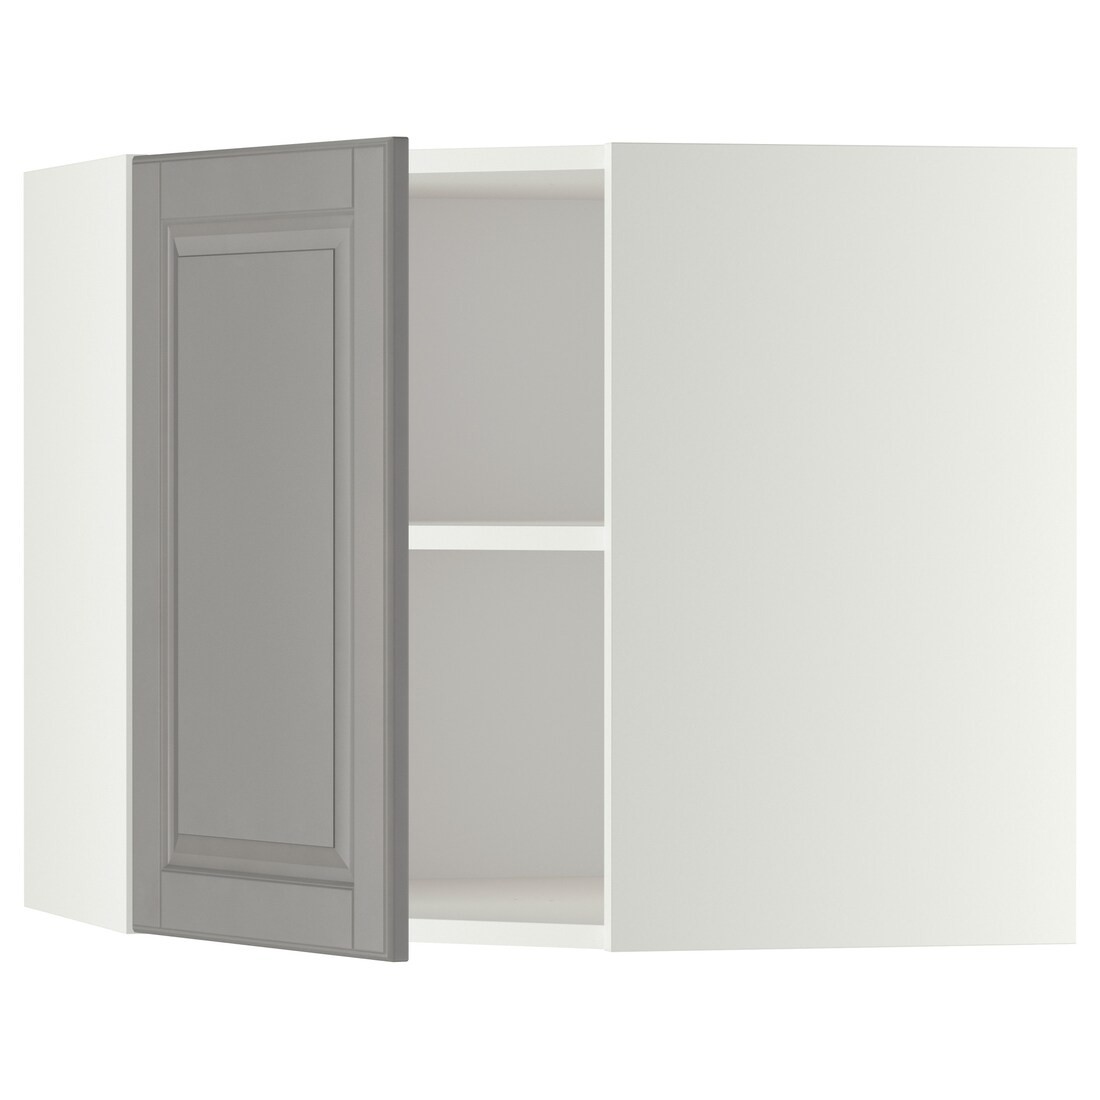 METOD МЕТОД Углов настенный шкаф, белый / Bodbyn серый, 68x60 см